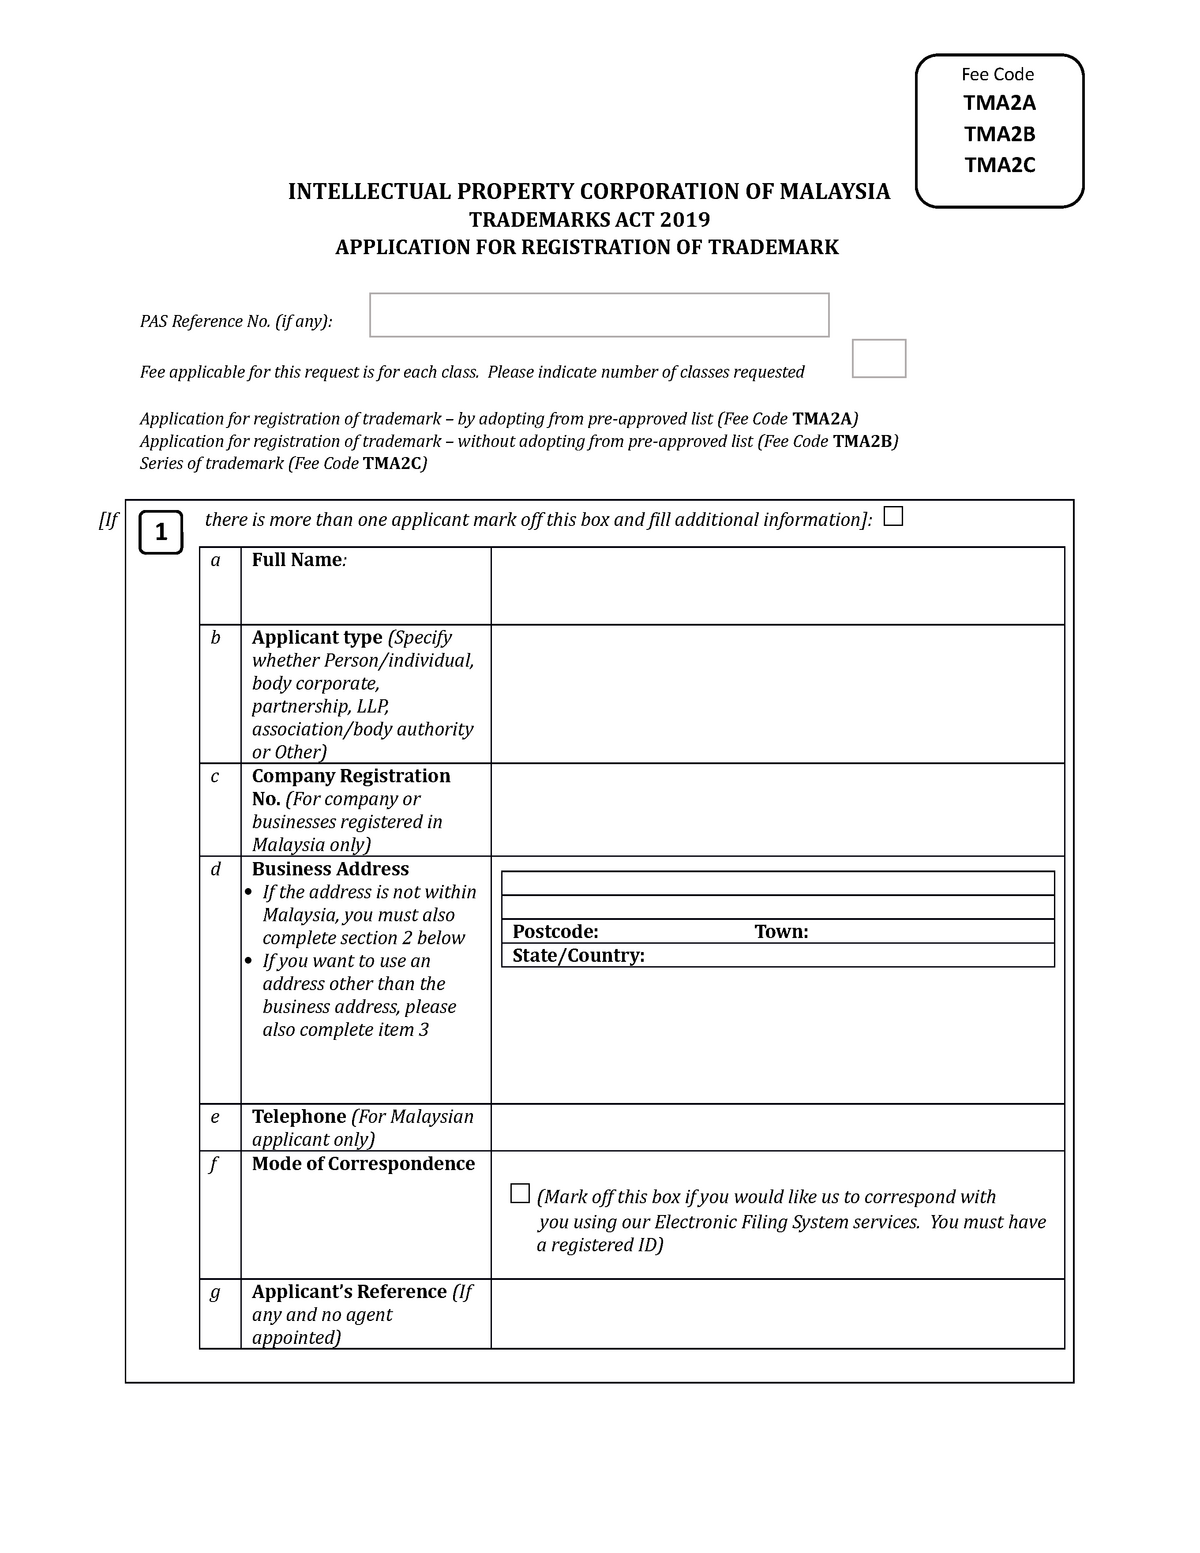 TMA2 Application for Registration fo Trademark - Labour Law - ULB 